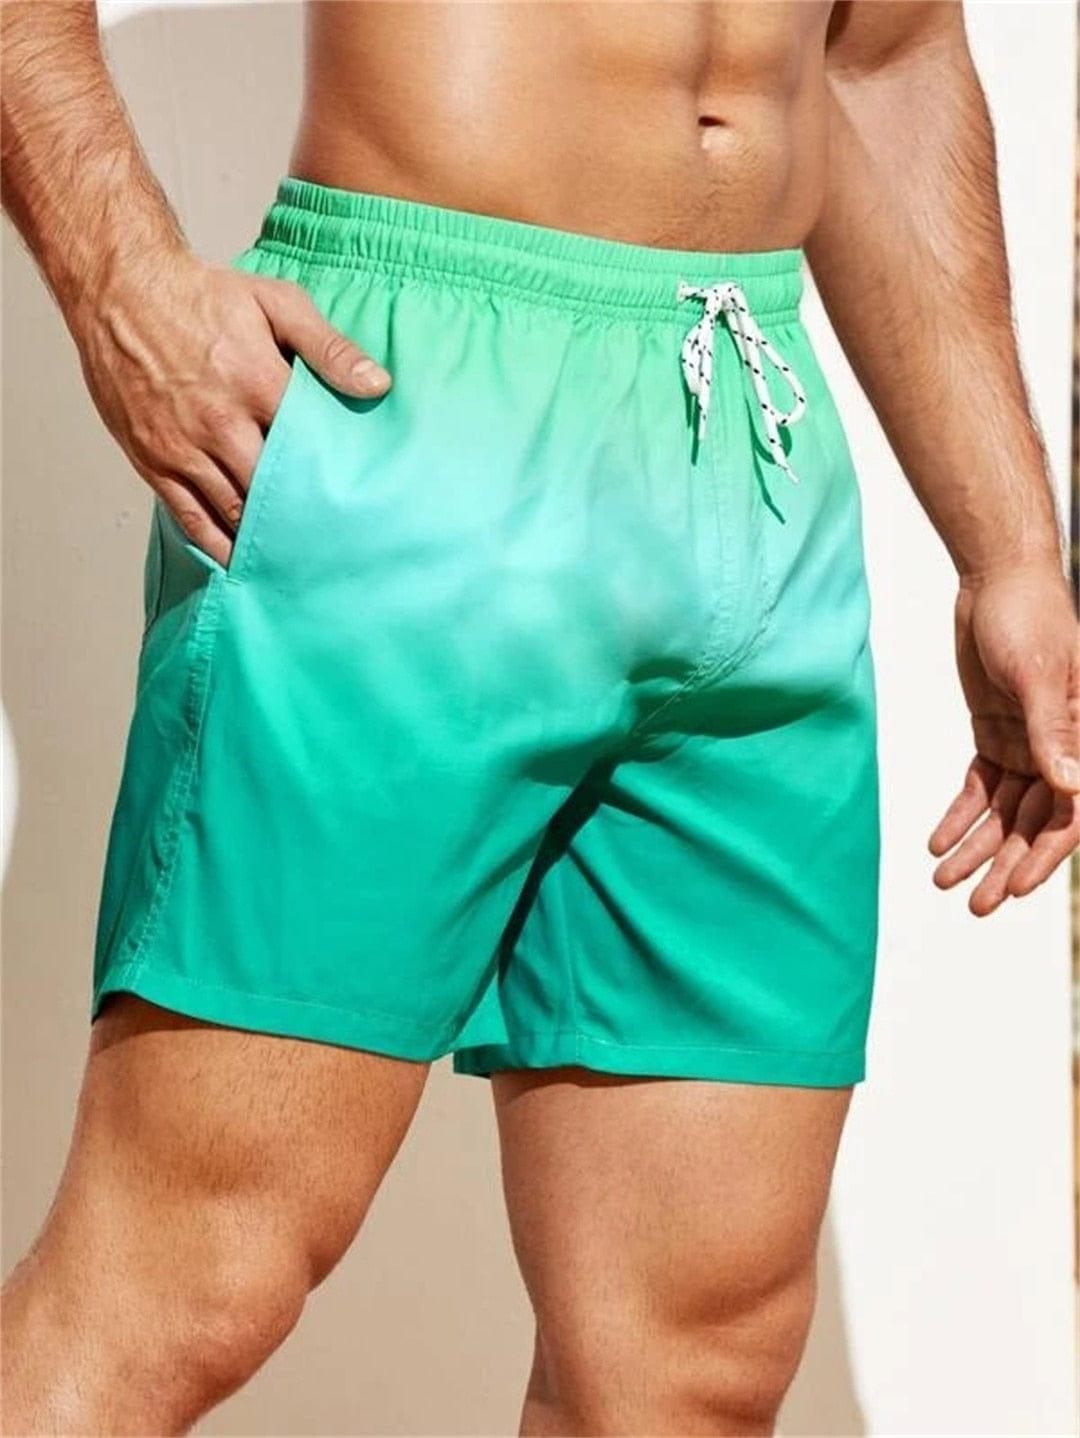 David swim shorts trunks (Plus sizes) Verso Green S 